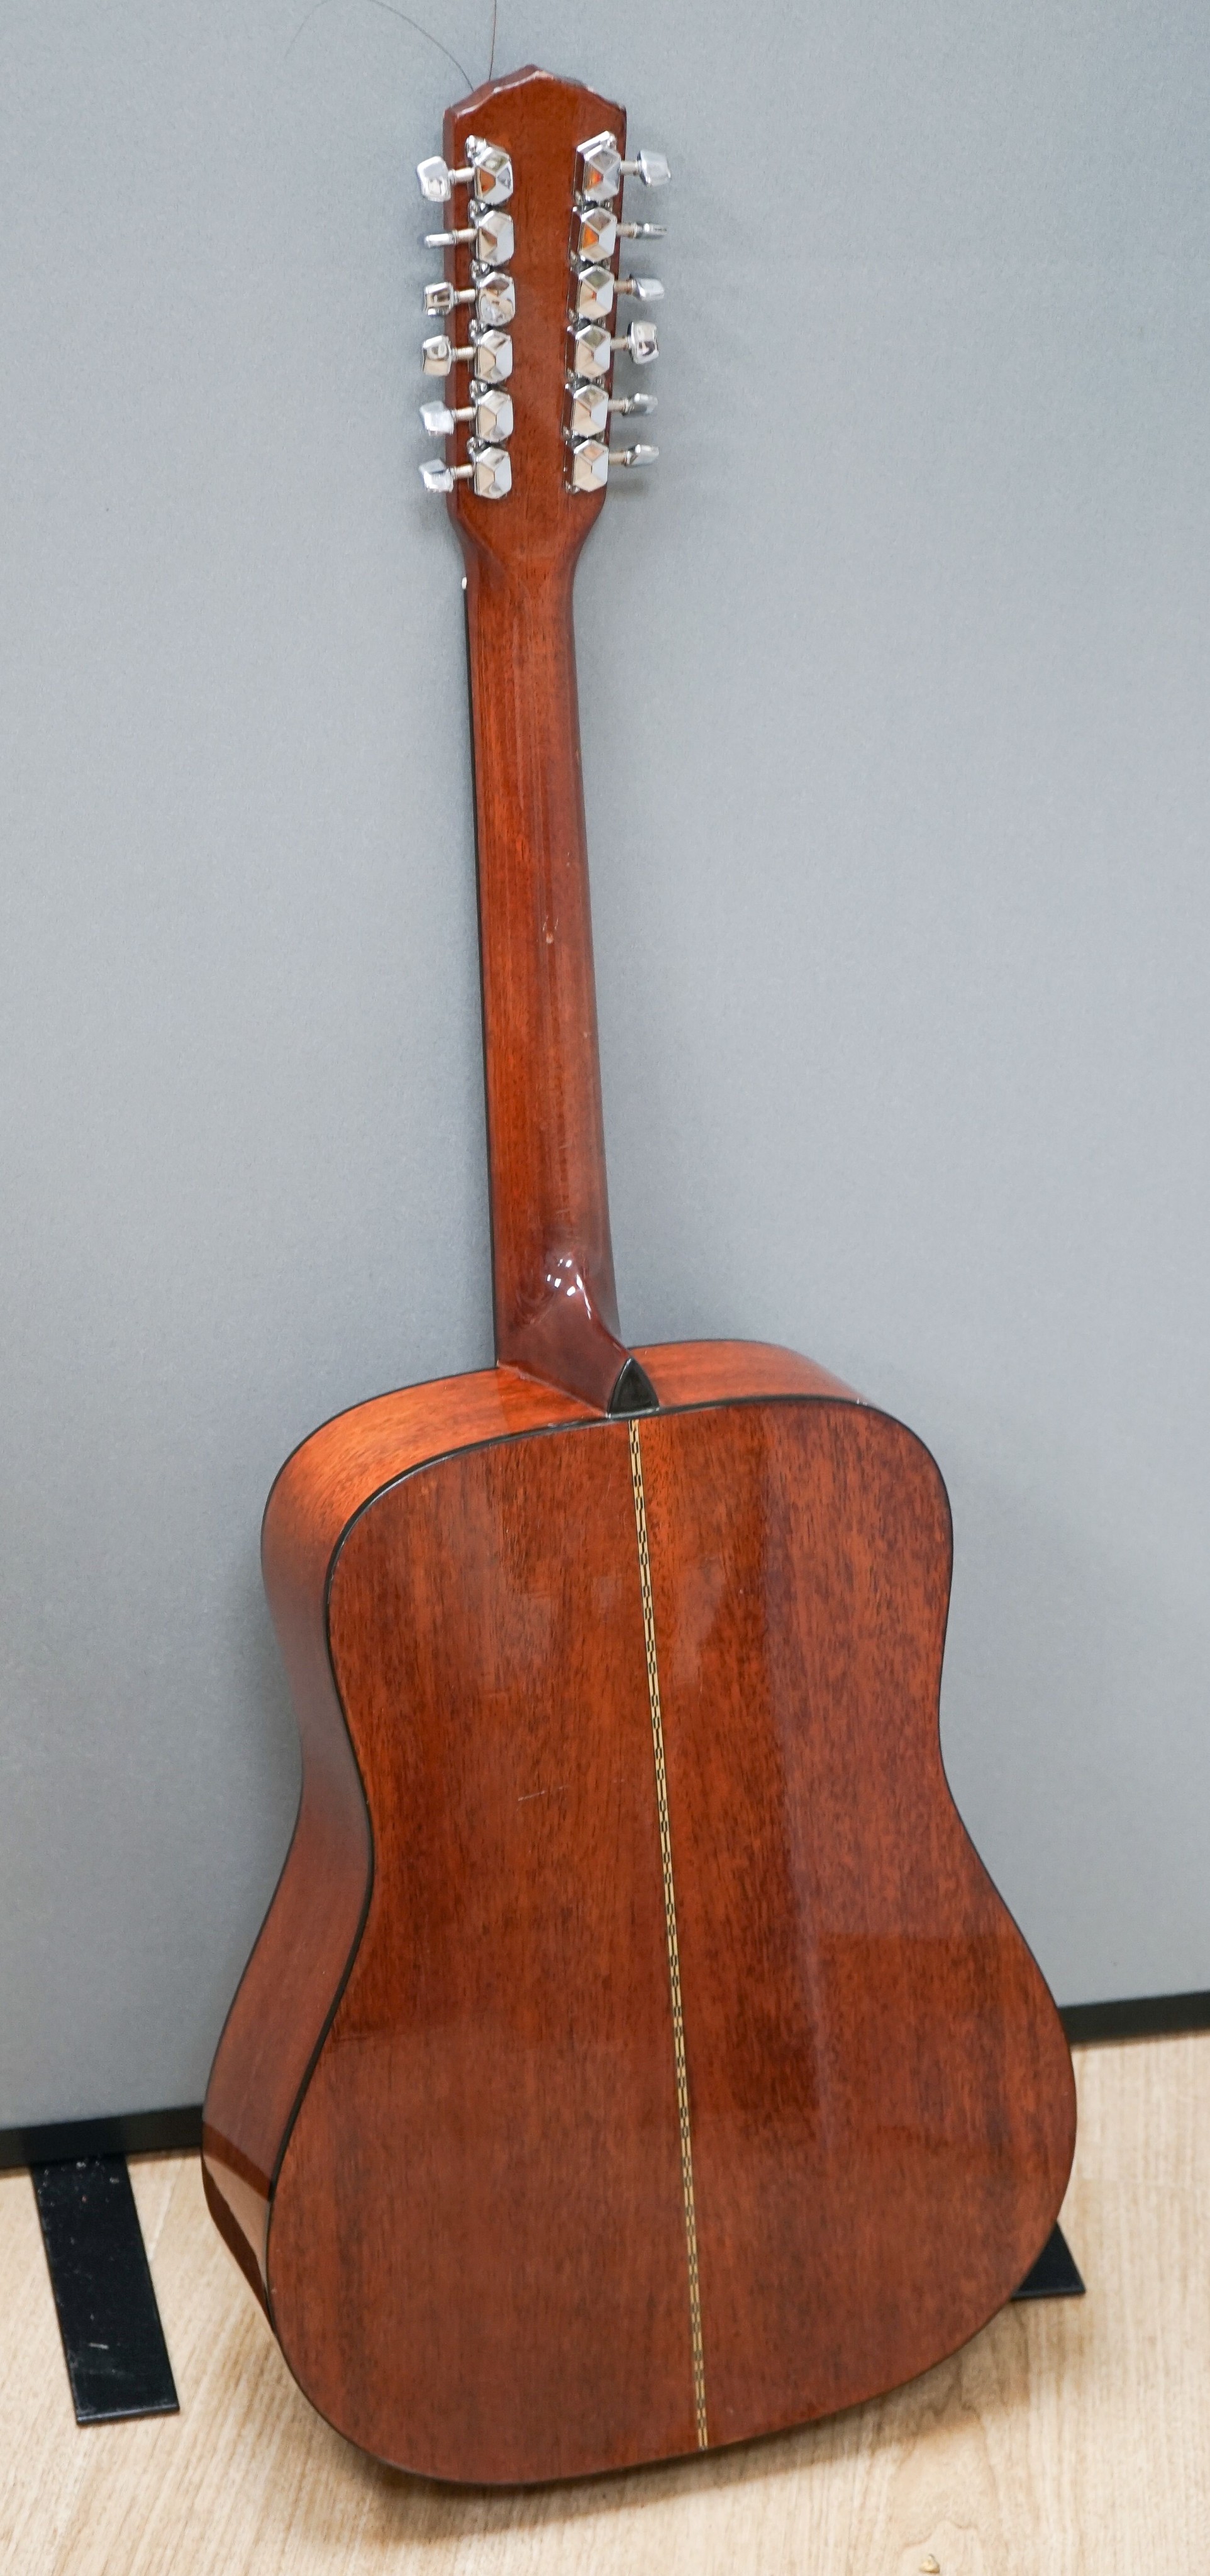 A Fender 12 string acoustic guitar DG 18 12 serial no: 90112437